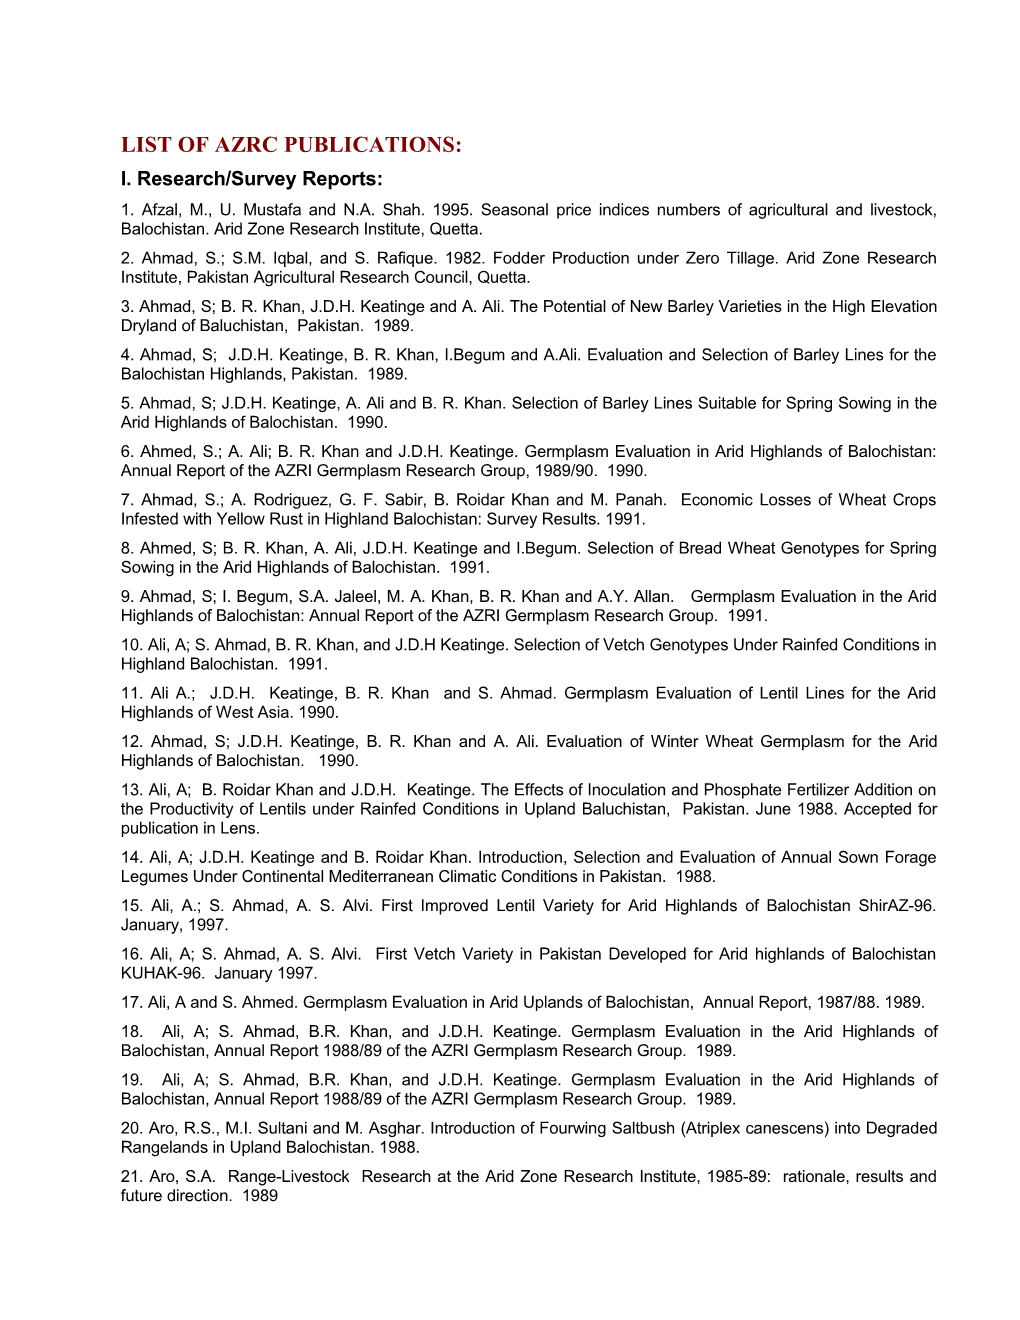 List of Azrc Publications